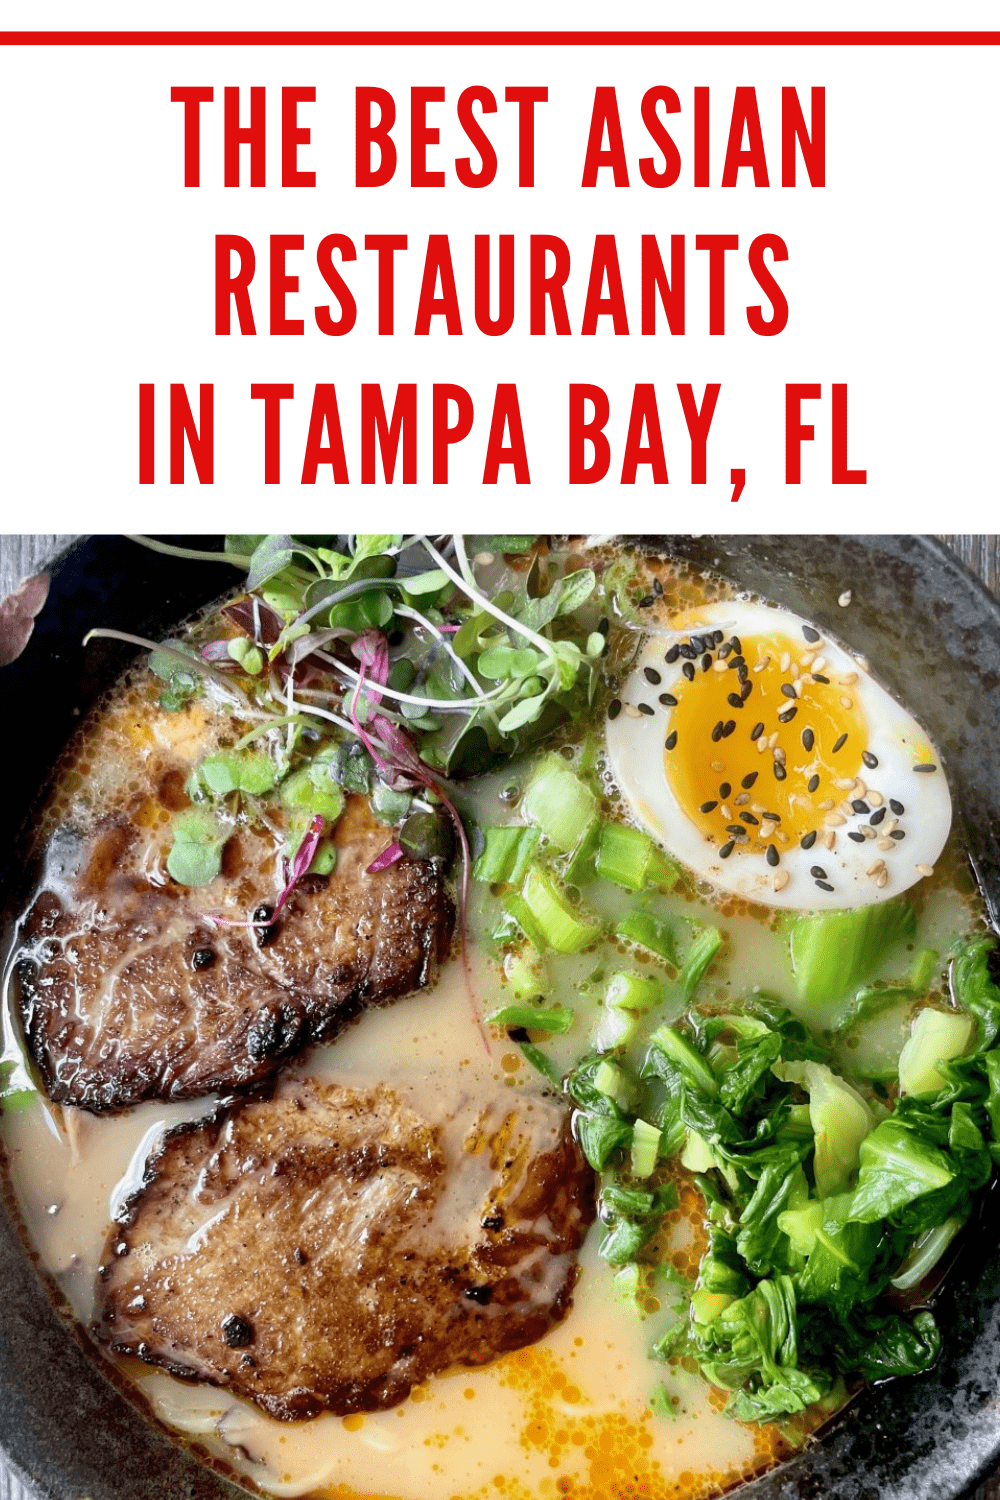 The Best Asian Restaurants In Tampa Bay, FL